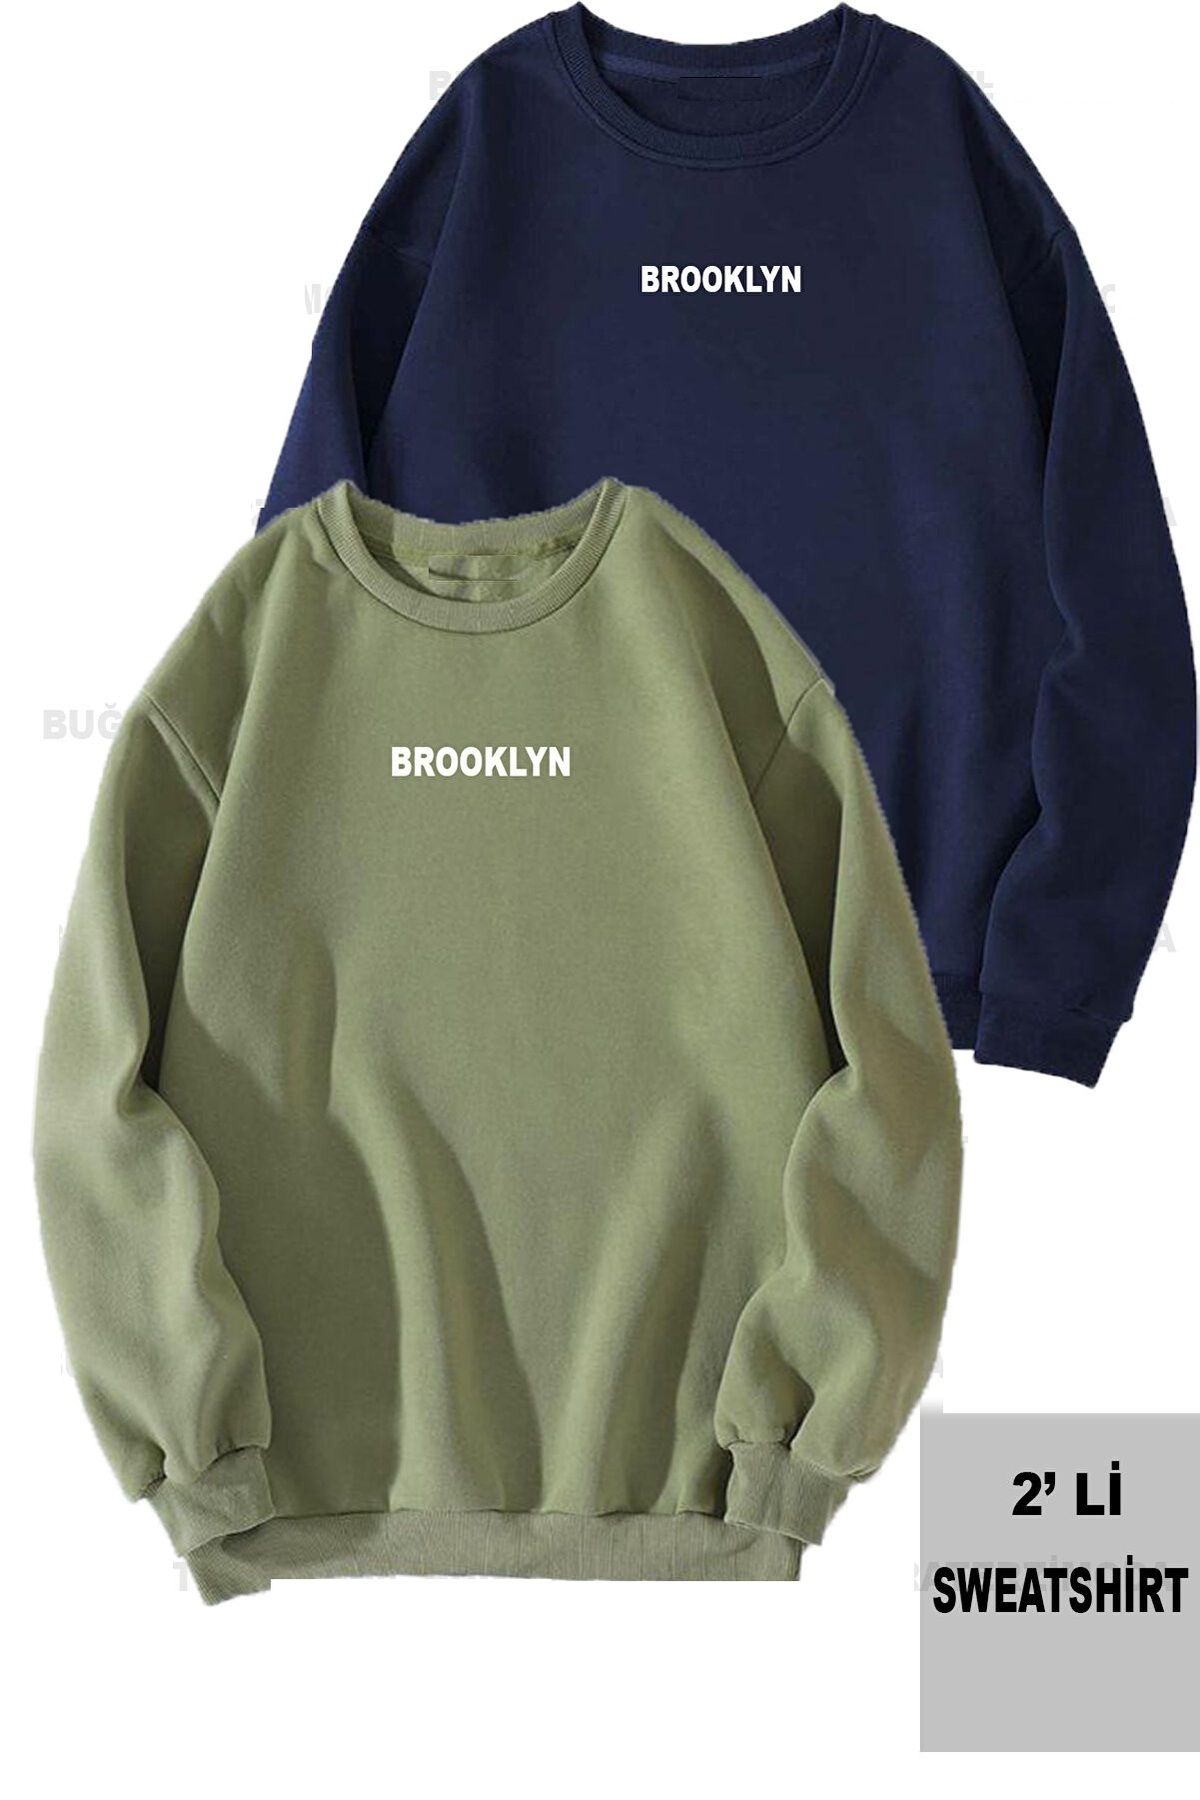 blausee wear Brooklyn Baskılı Unisex Oversize Haki-Lacivert İkili Sweathirt